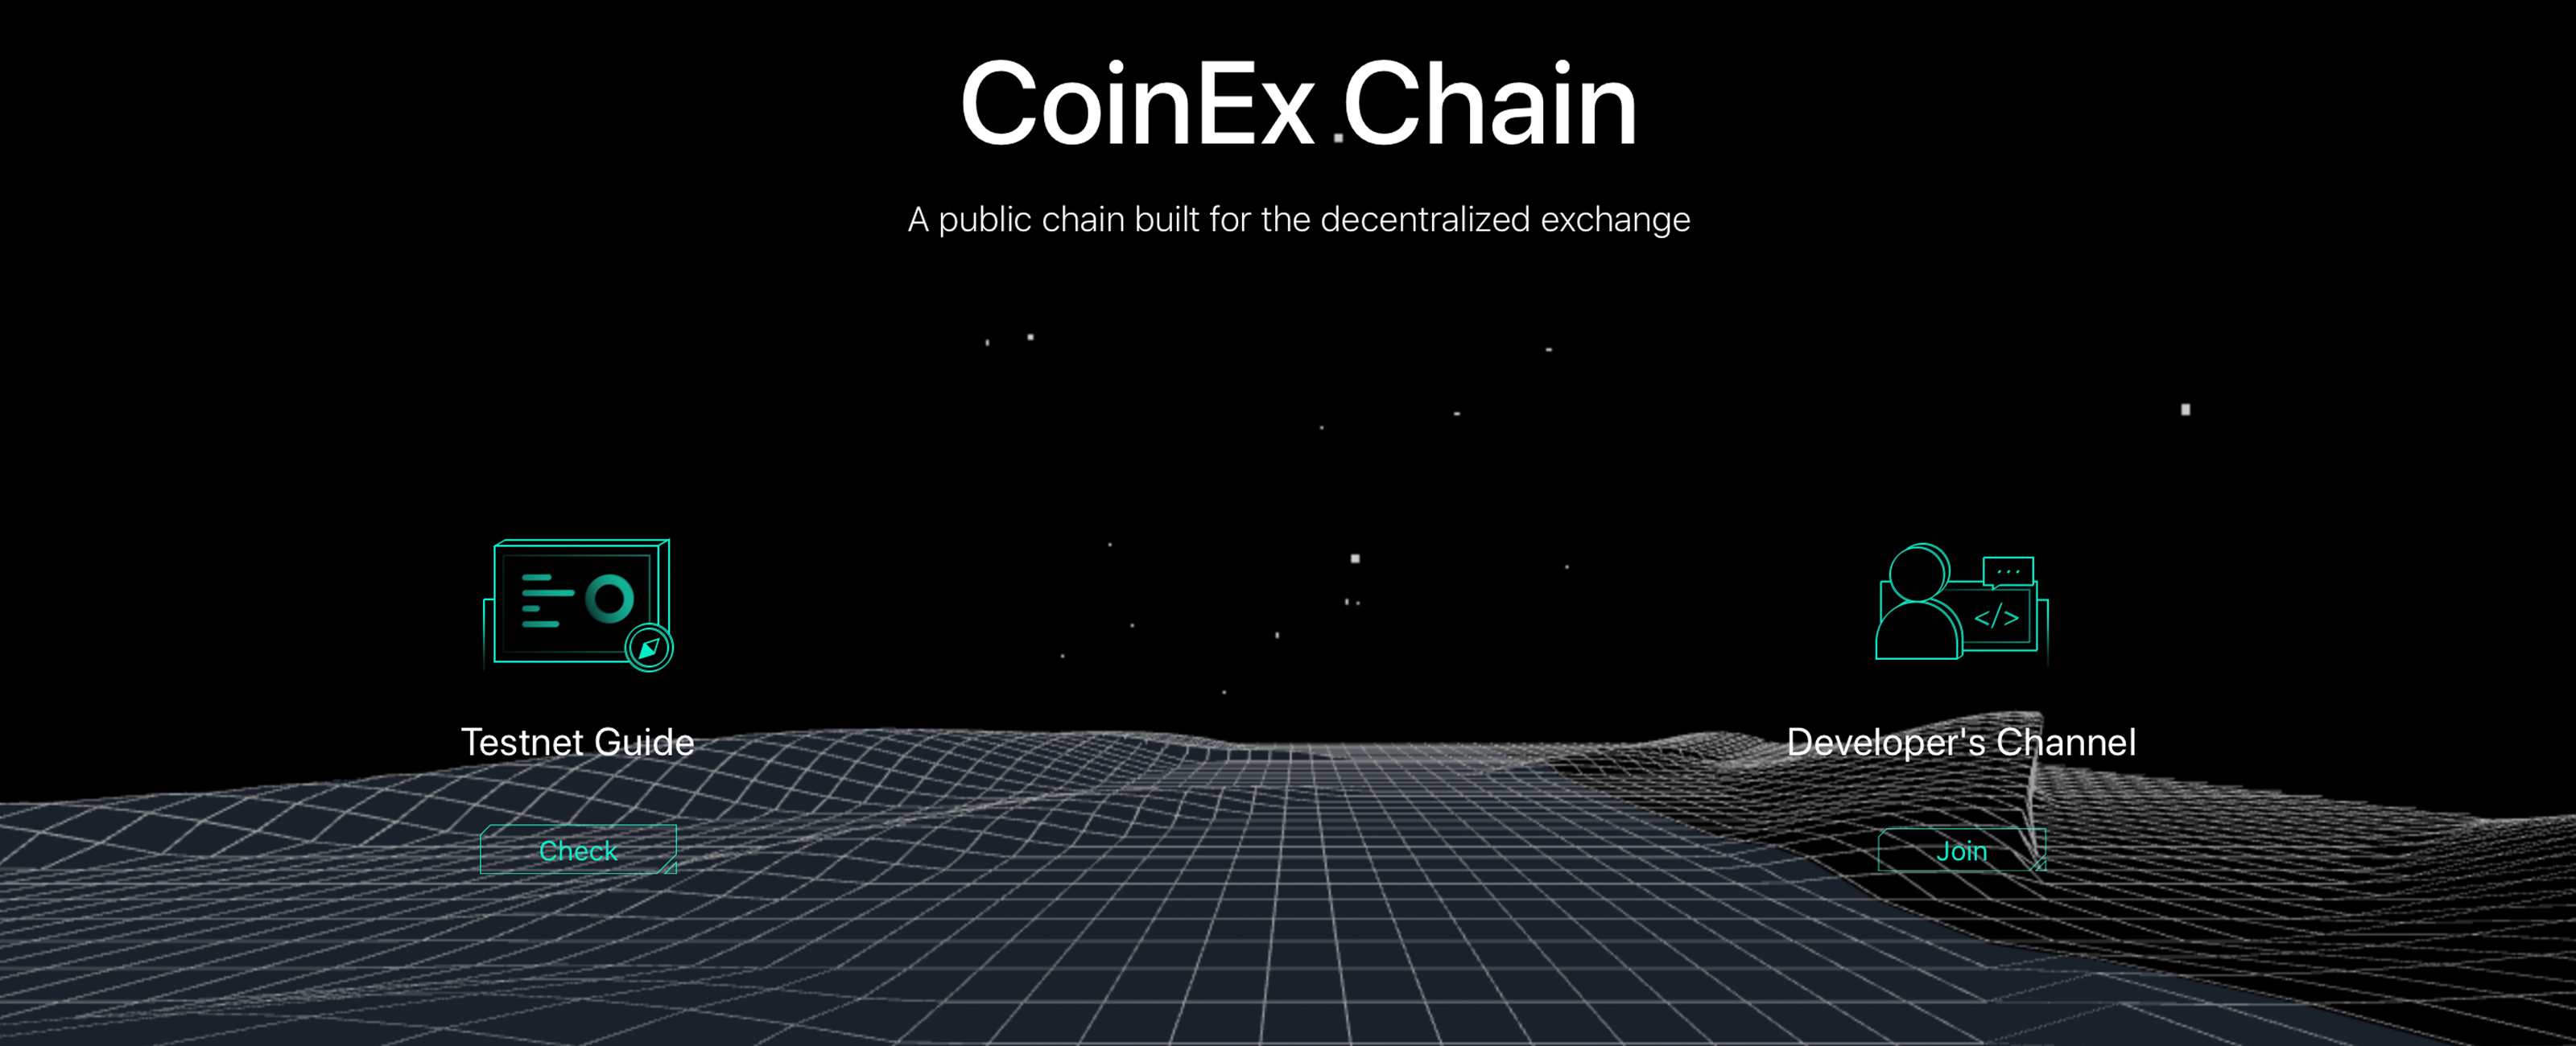 Bitcoin.com Joins the Coinex Chain Pre-Election Node Process